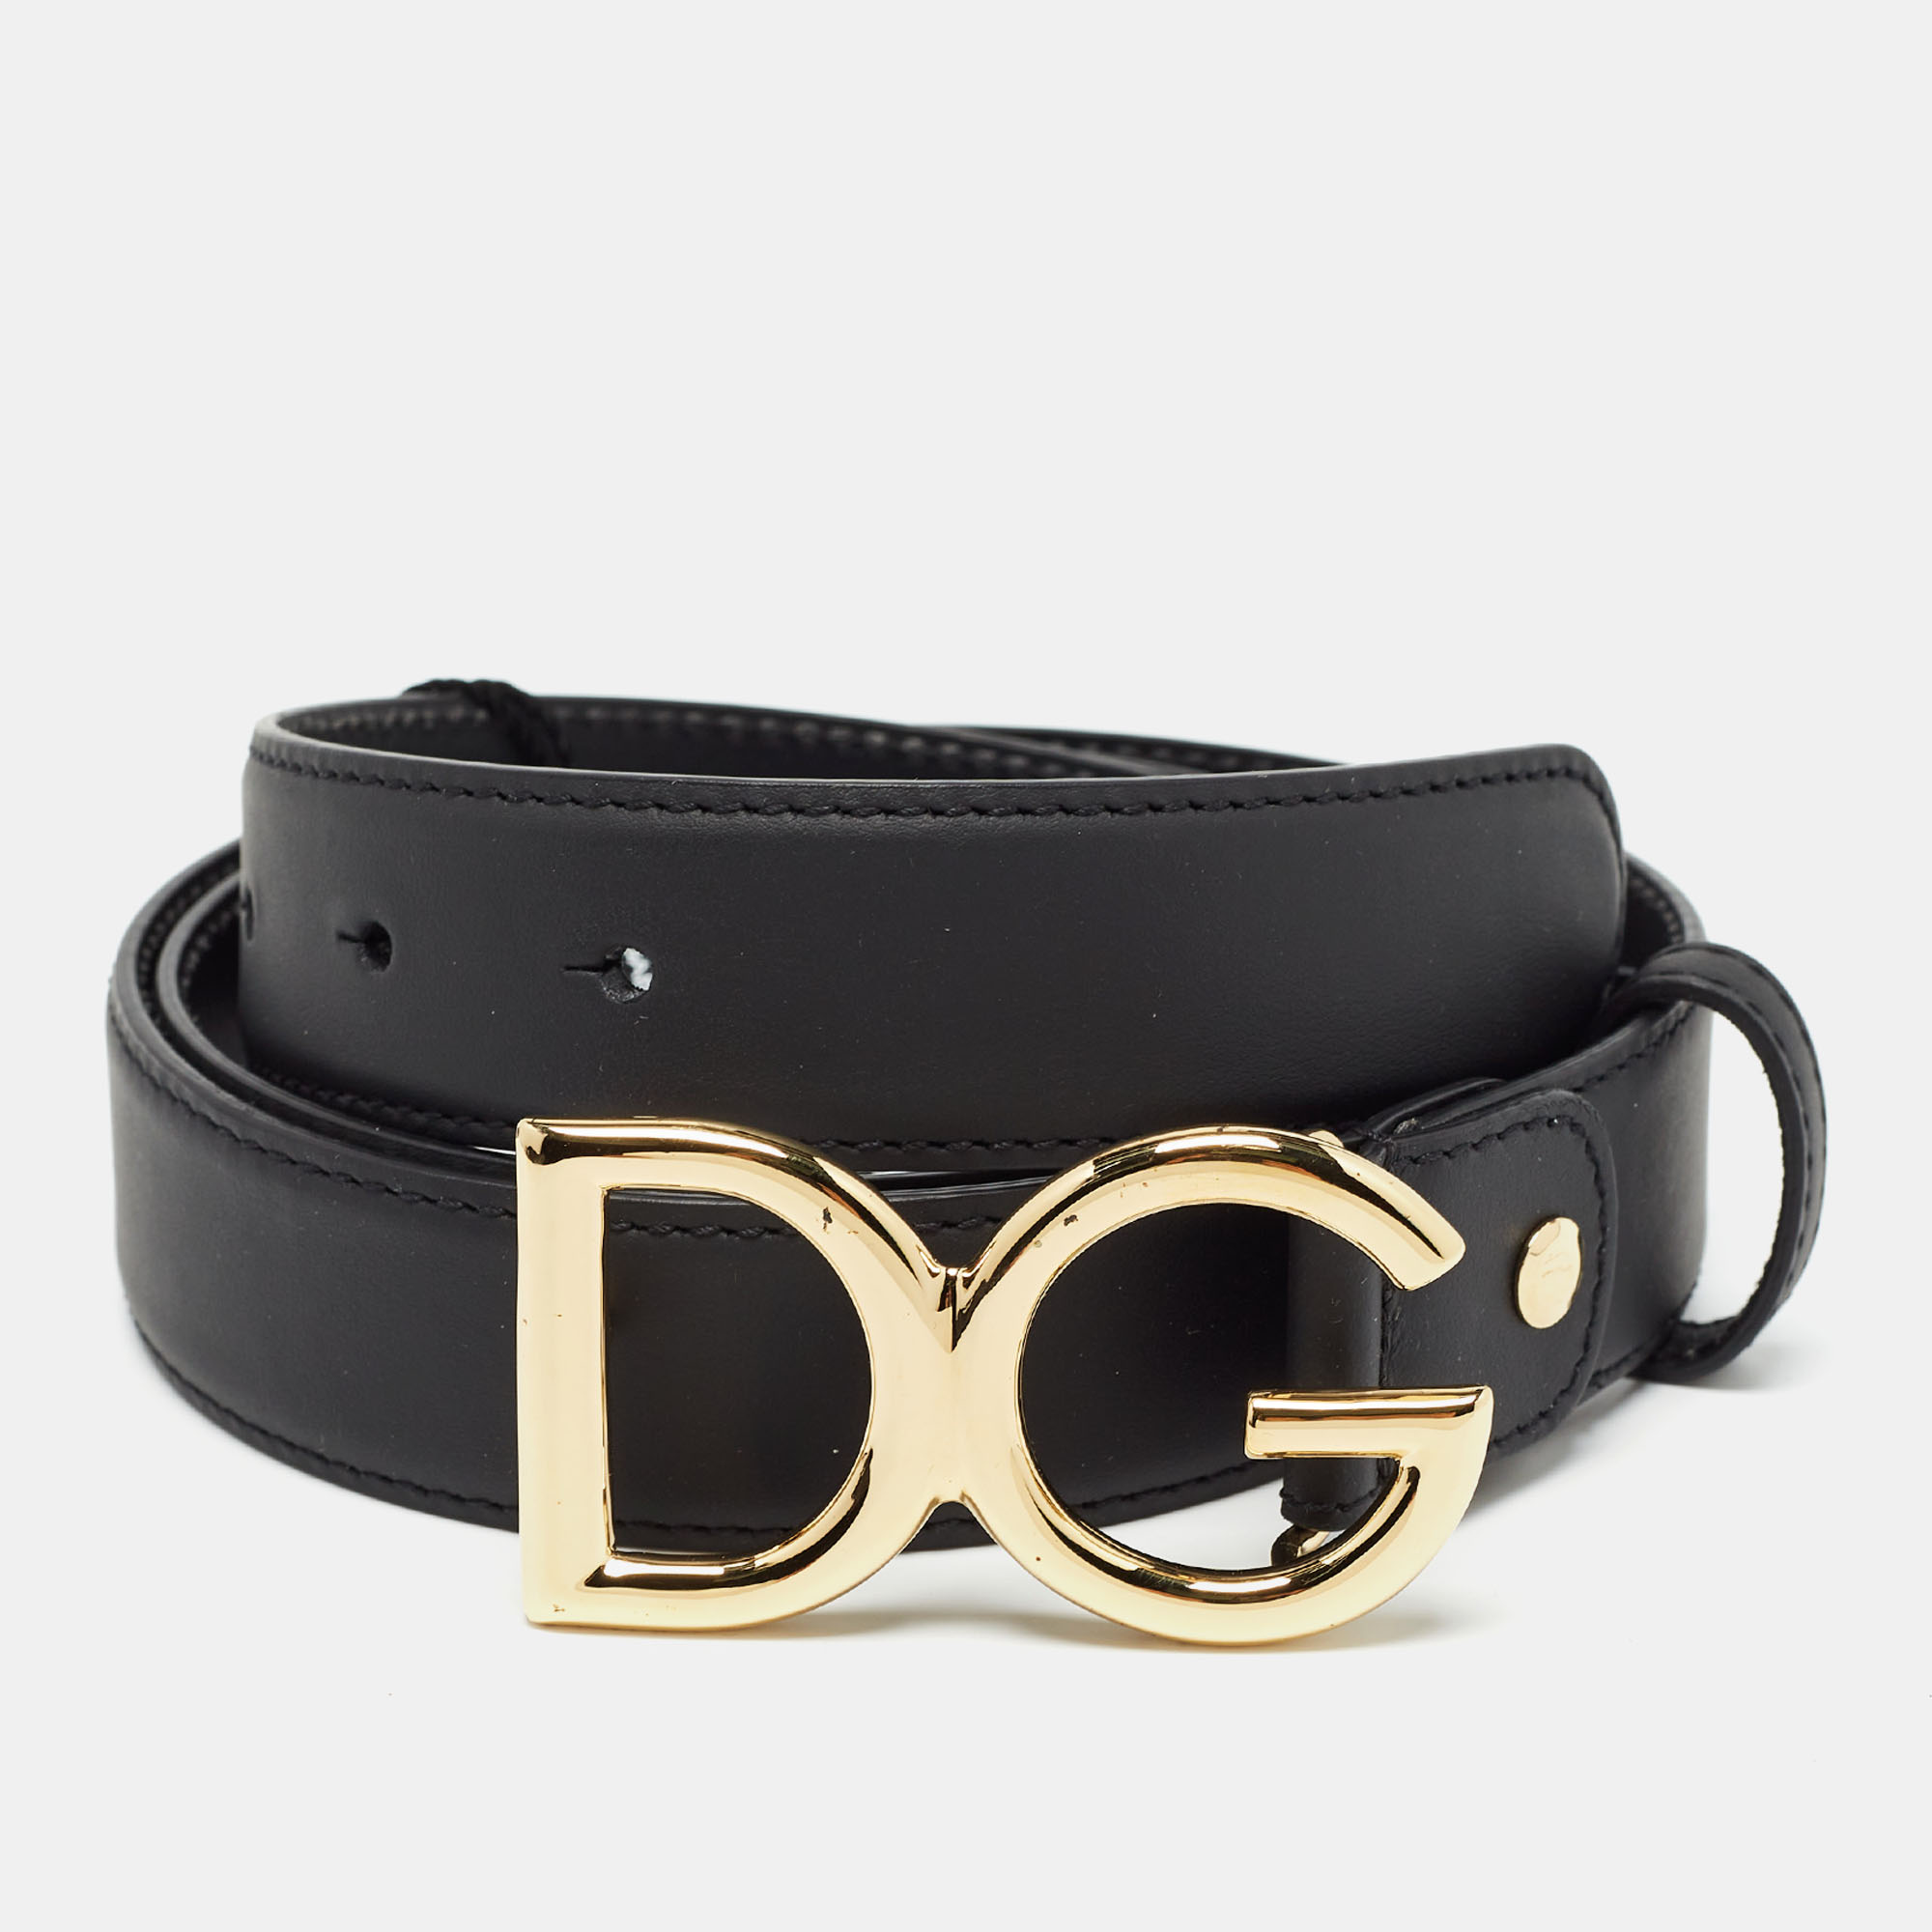 Pre-owned Dolce & Gabbana Black Leather Dg Logo Buckle Belt 115 Cm